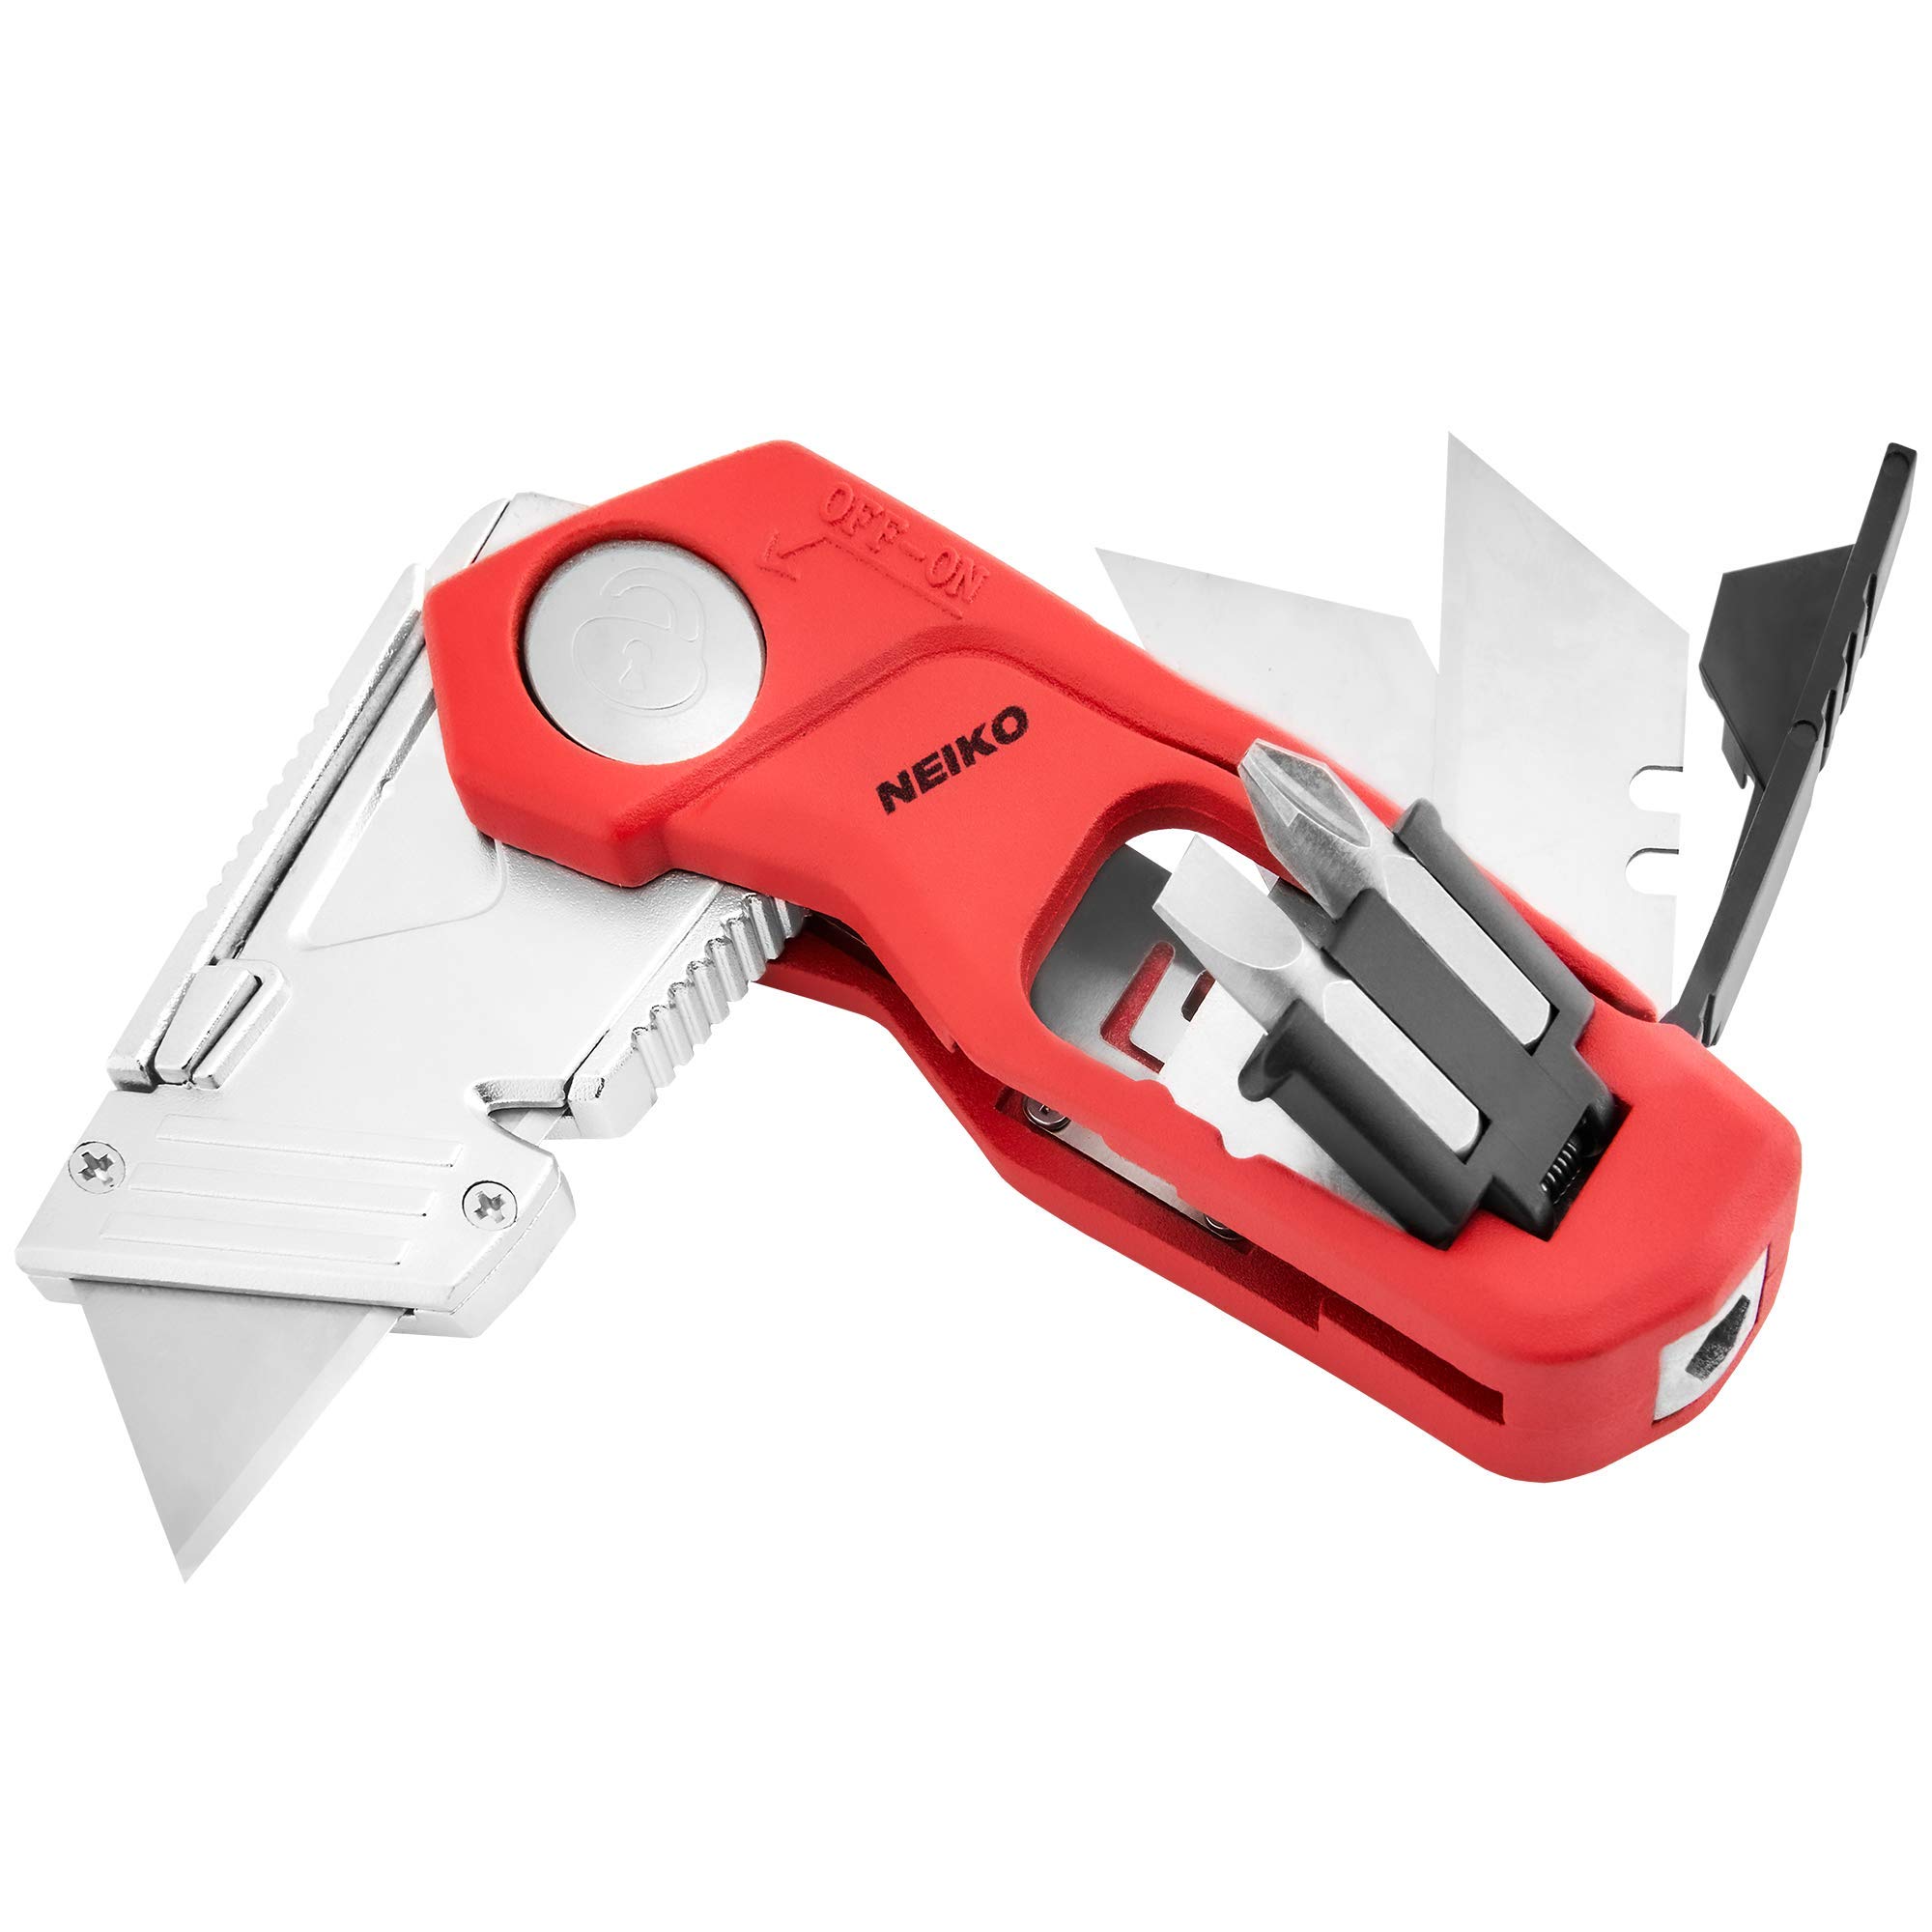 NEIKO 00678A 4-In-1 Folding Utility Knife Box cutter Knives Wire Stripper, Tool Hex Bit Holder Utility Work Knife Bit Storage, c